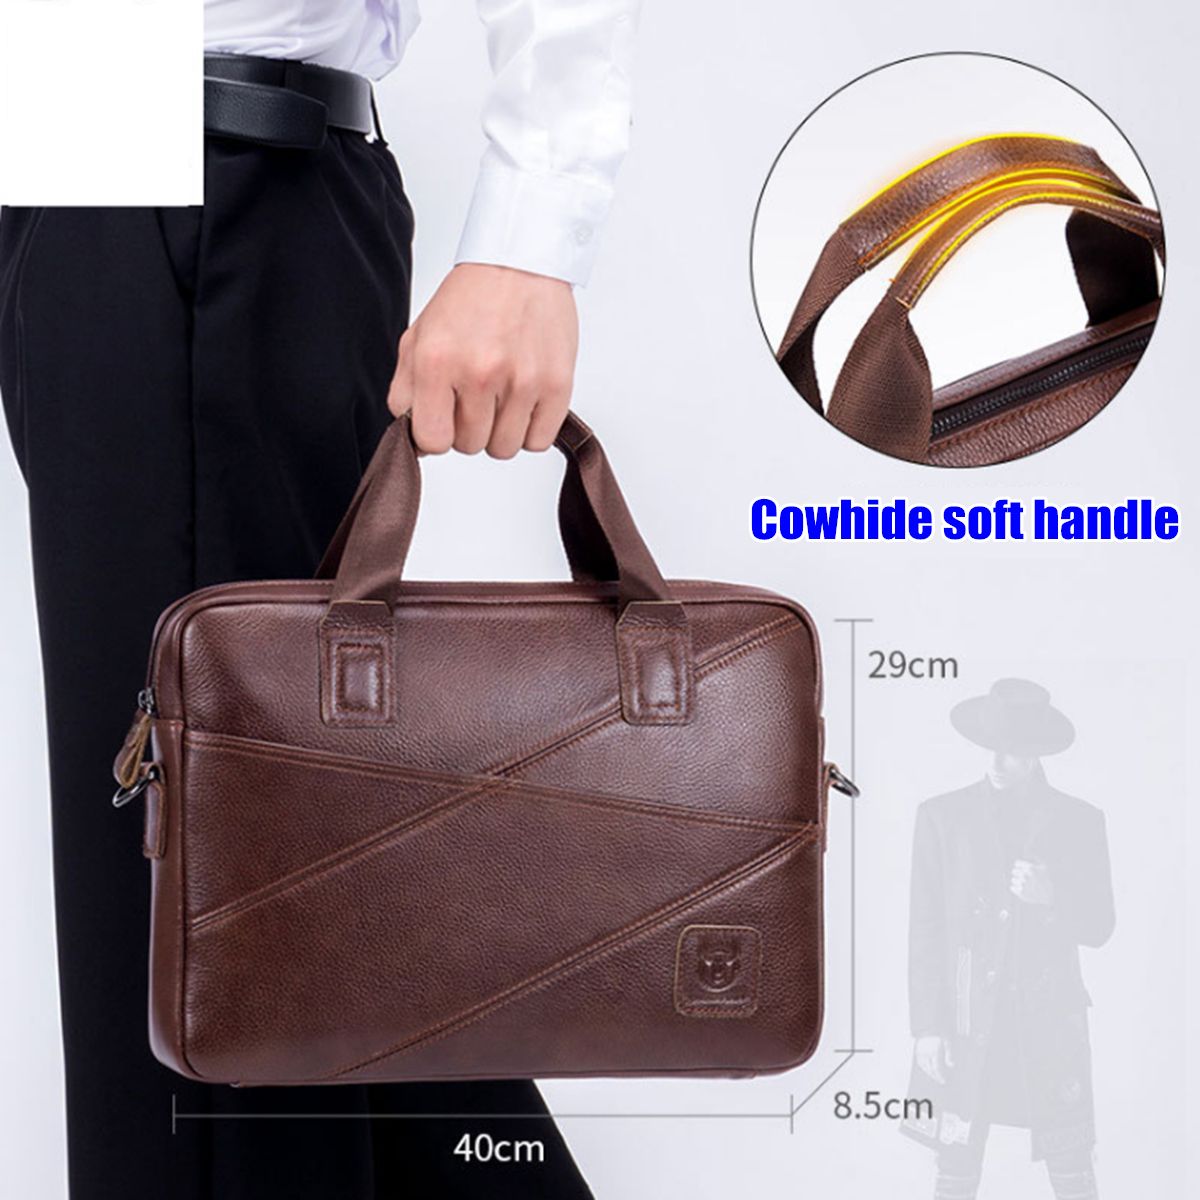 Cowhide-Business-Briefcase-Laptop-Bag-Handbag-Mens-Shoulders-Storage-Bag-Crossbody-Bag-for-15inch-No-1745108